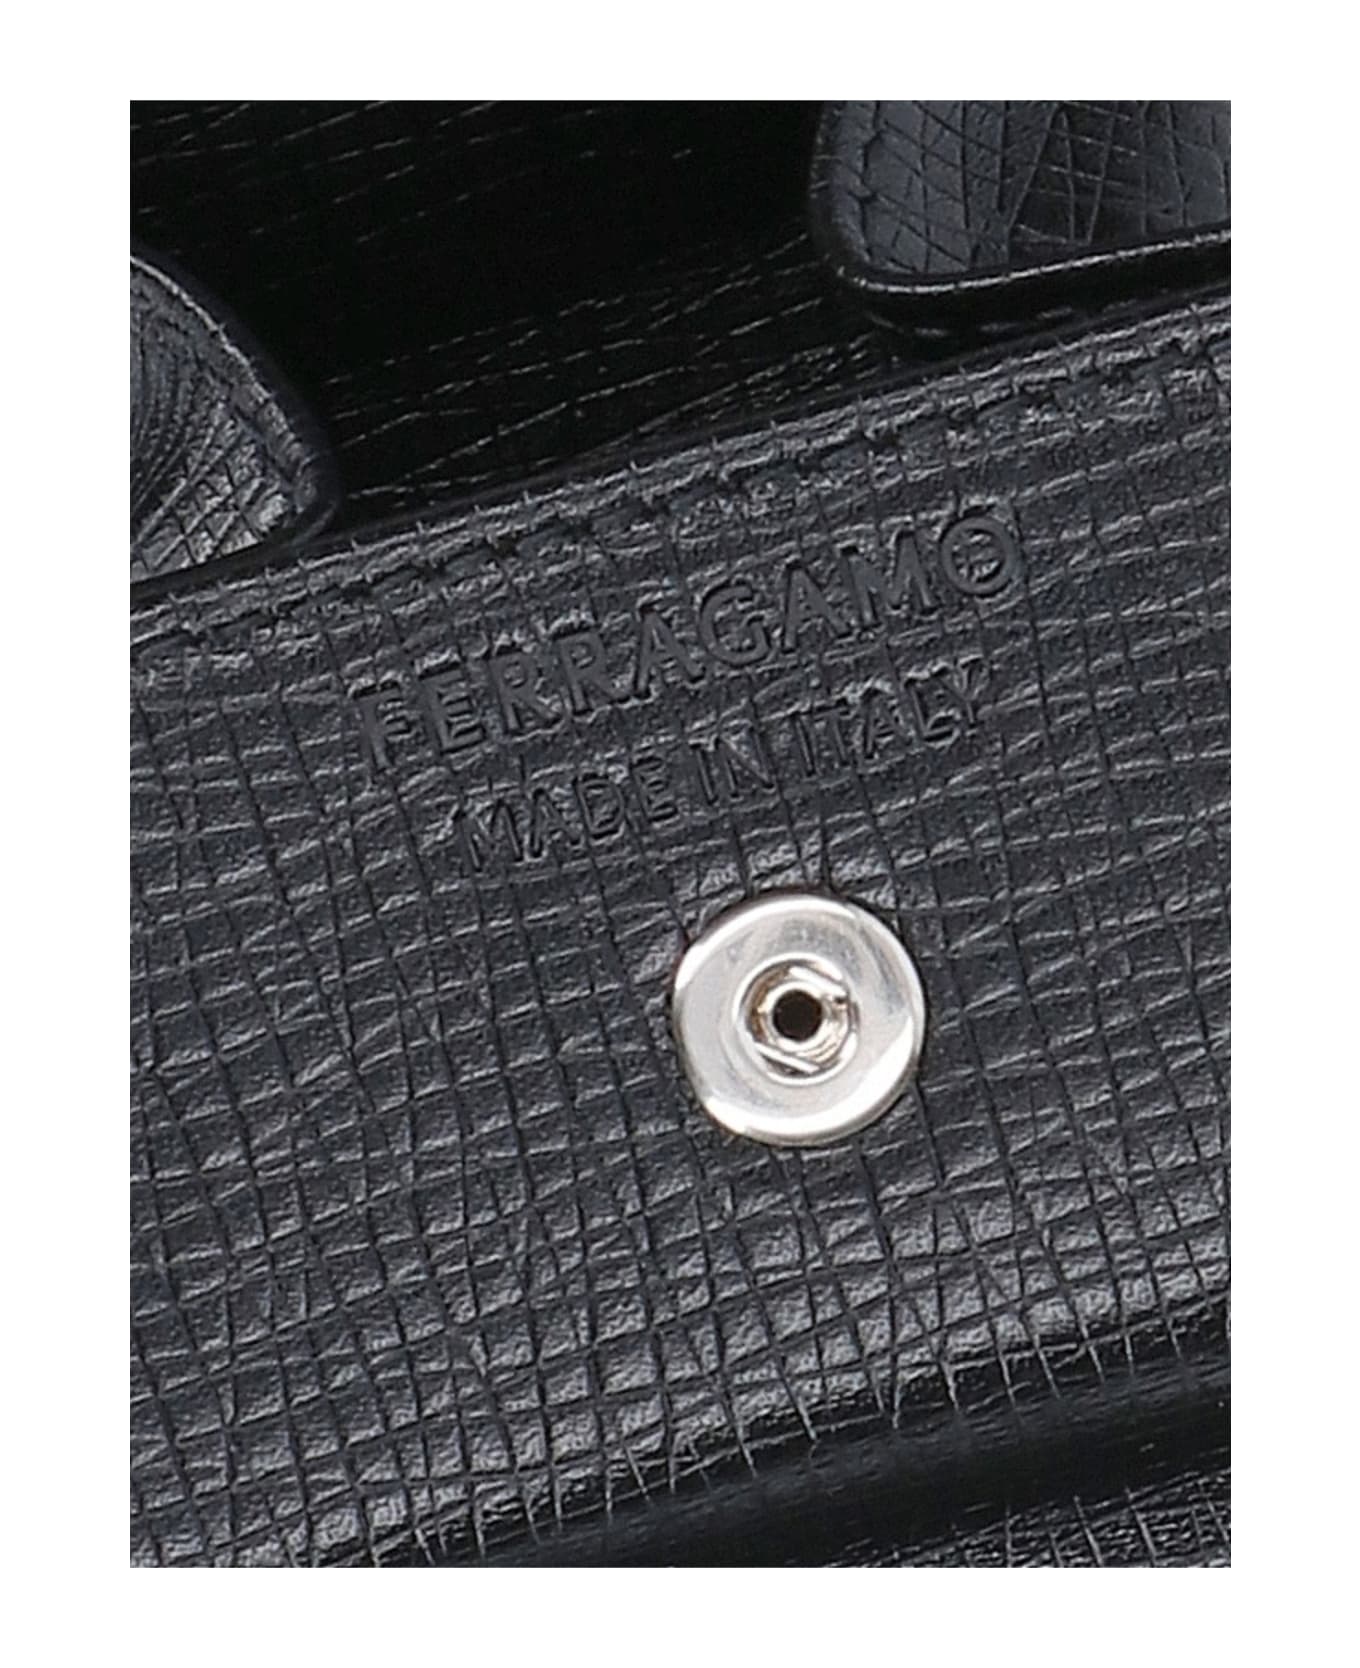 Ferragamo Logo Purse - Black   財布